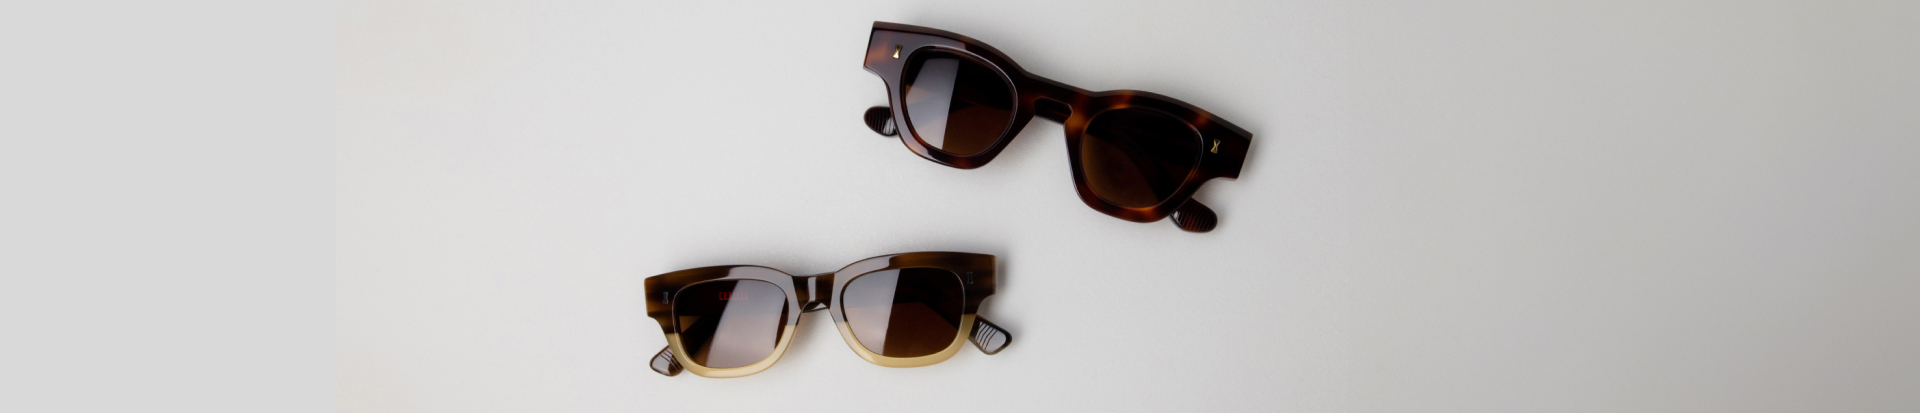 Affordable Essentials: Sunglasses